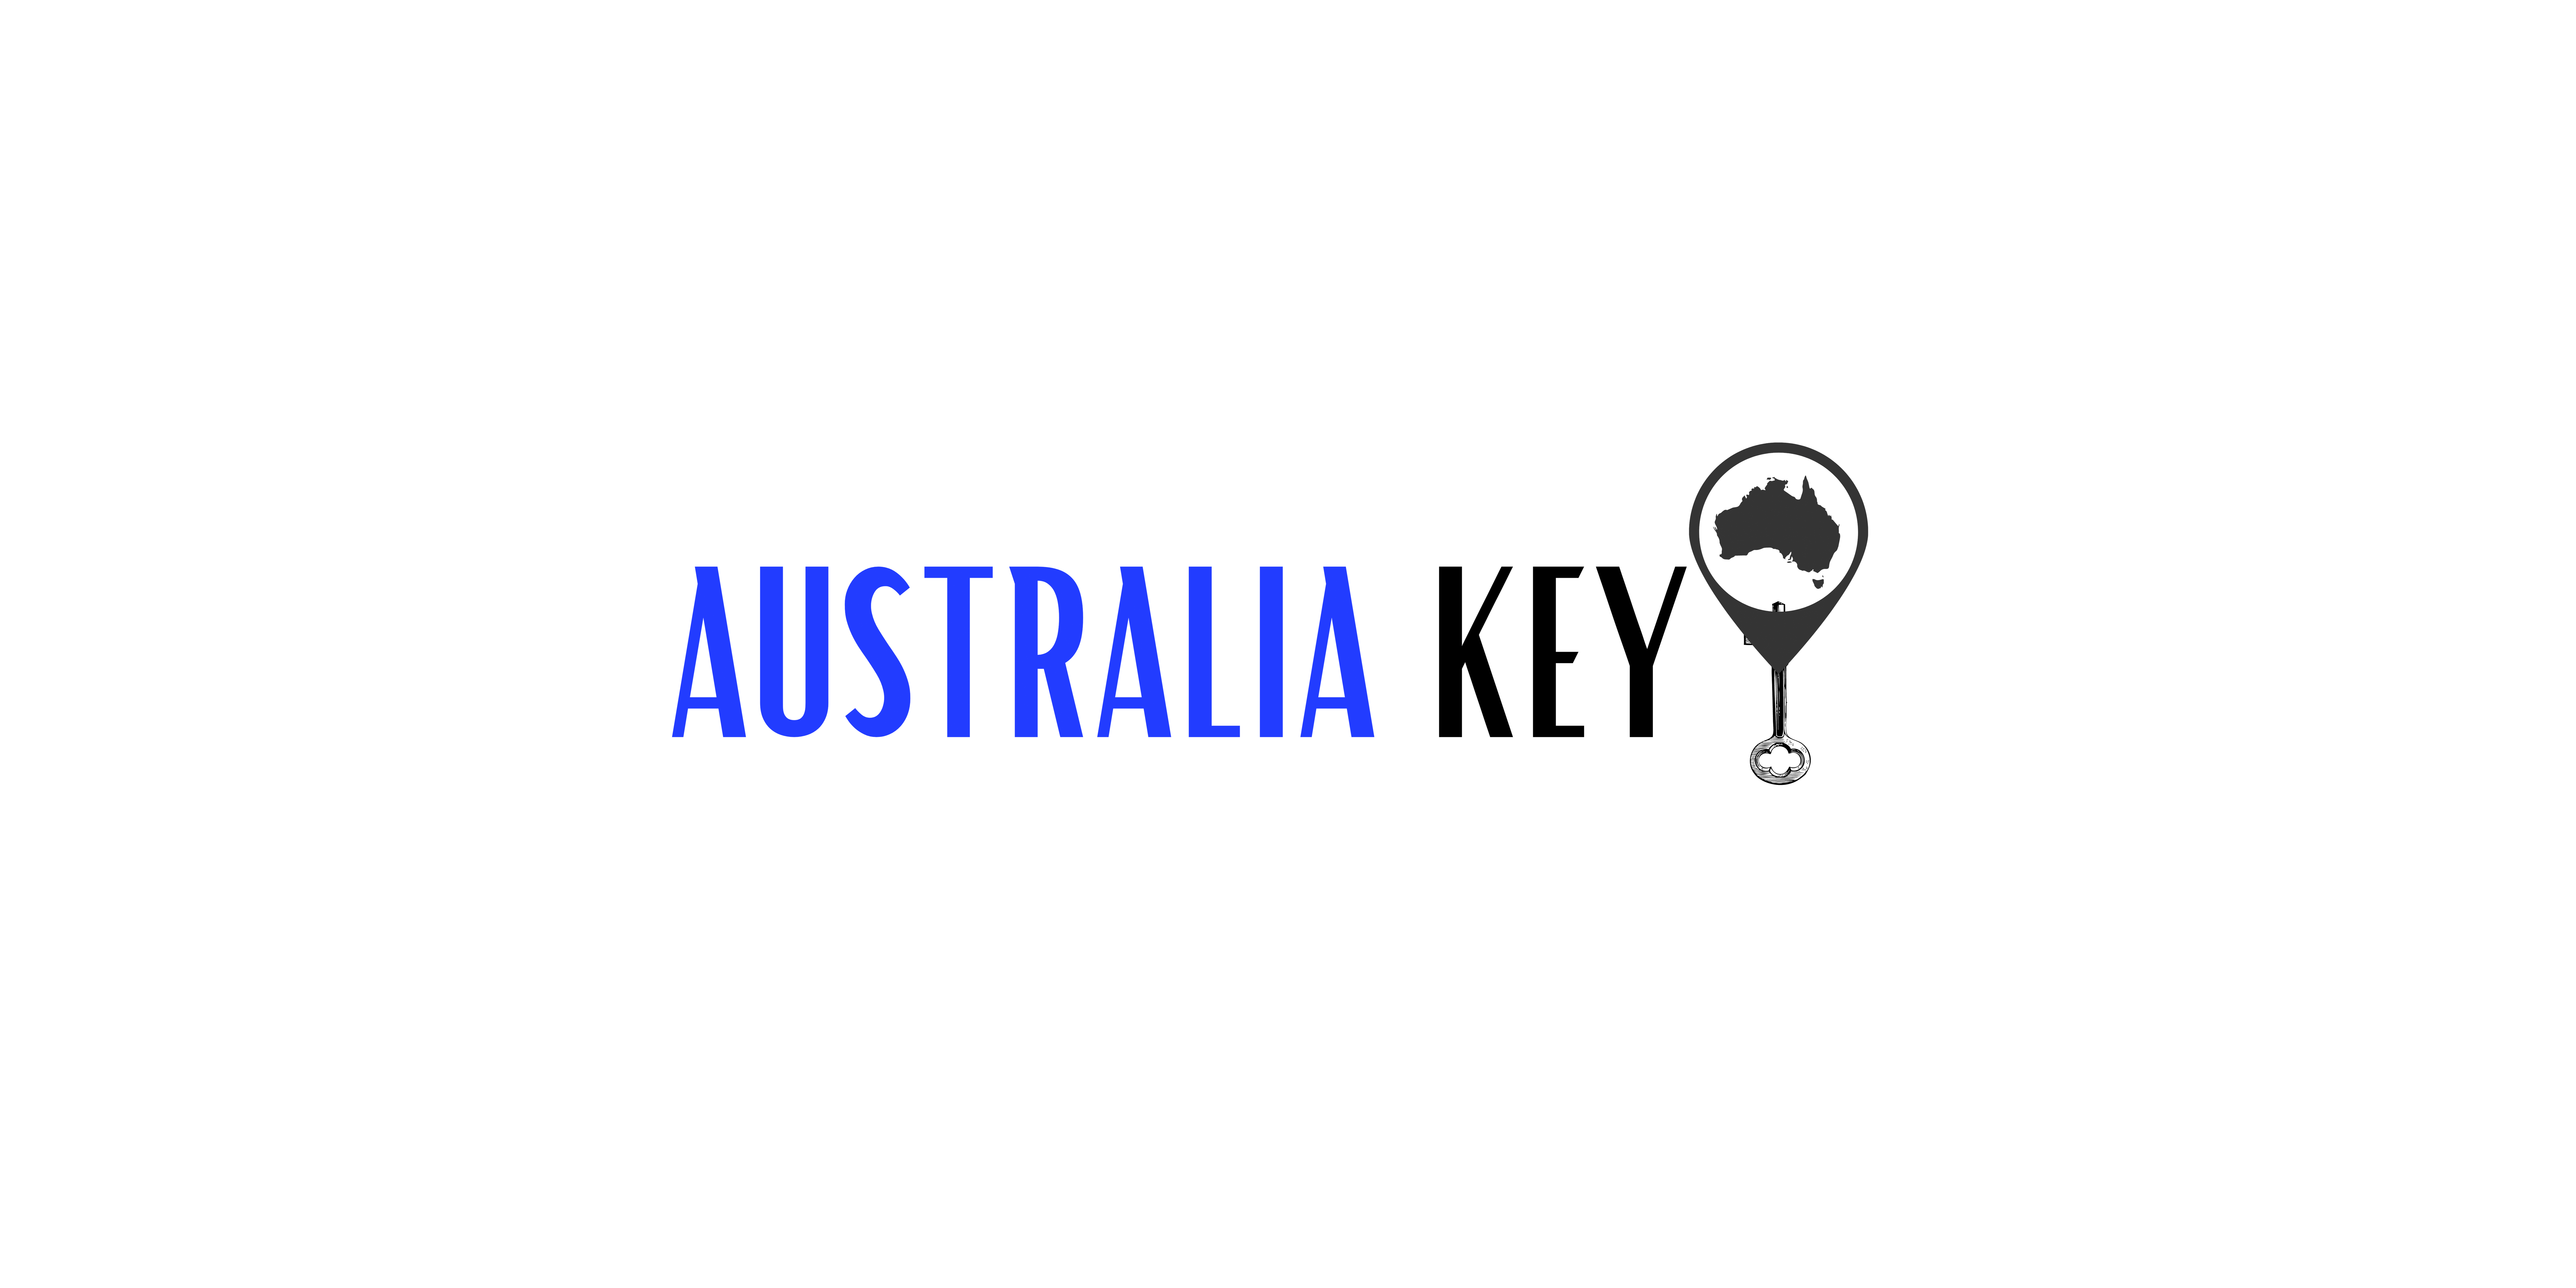 Australia Key